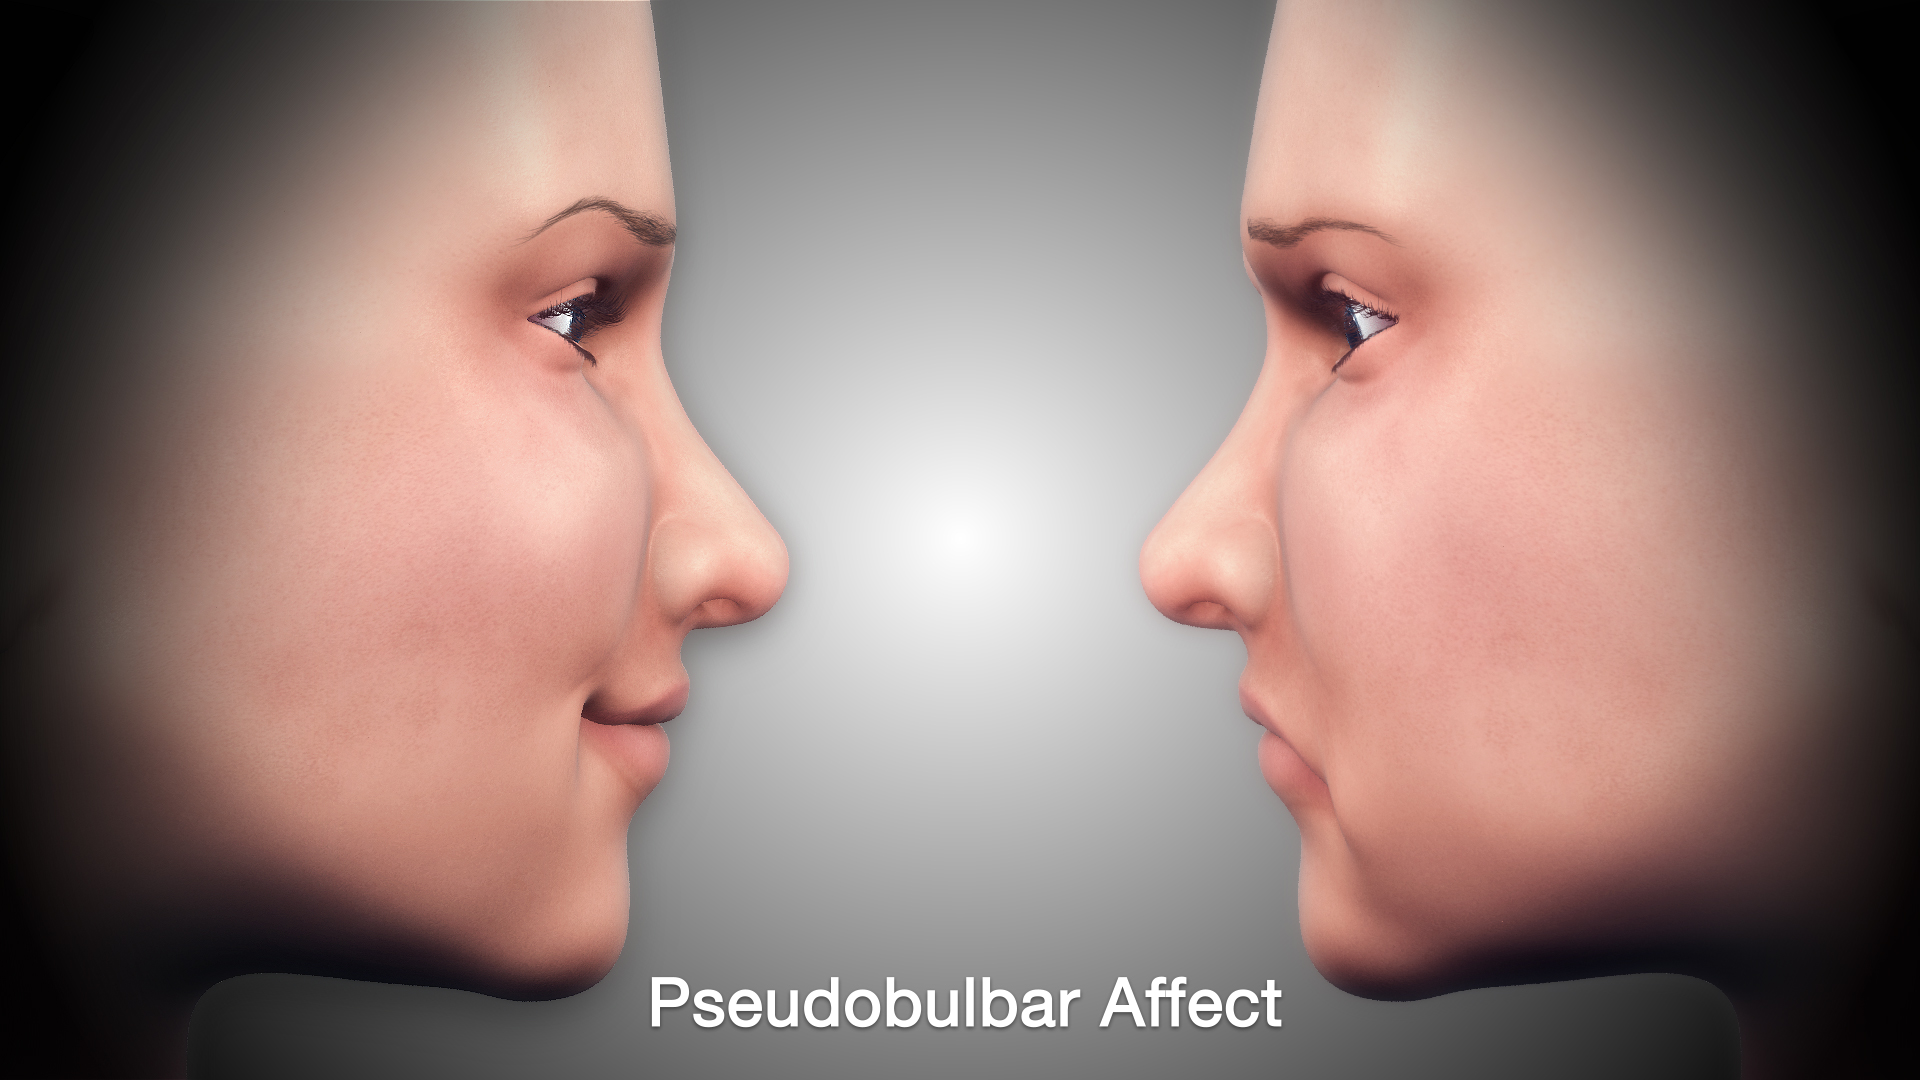 Medical Animation Illustrating Pseudobulbar Affect